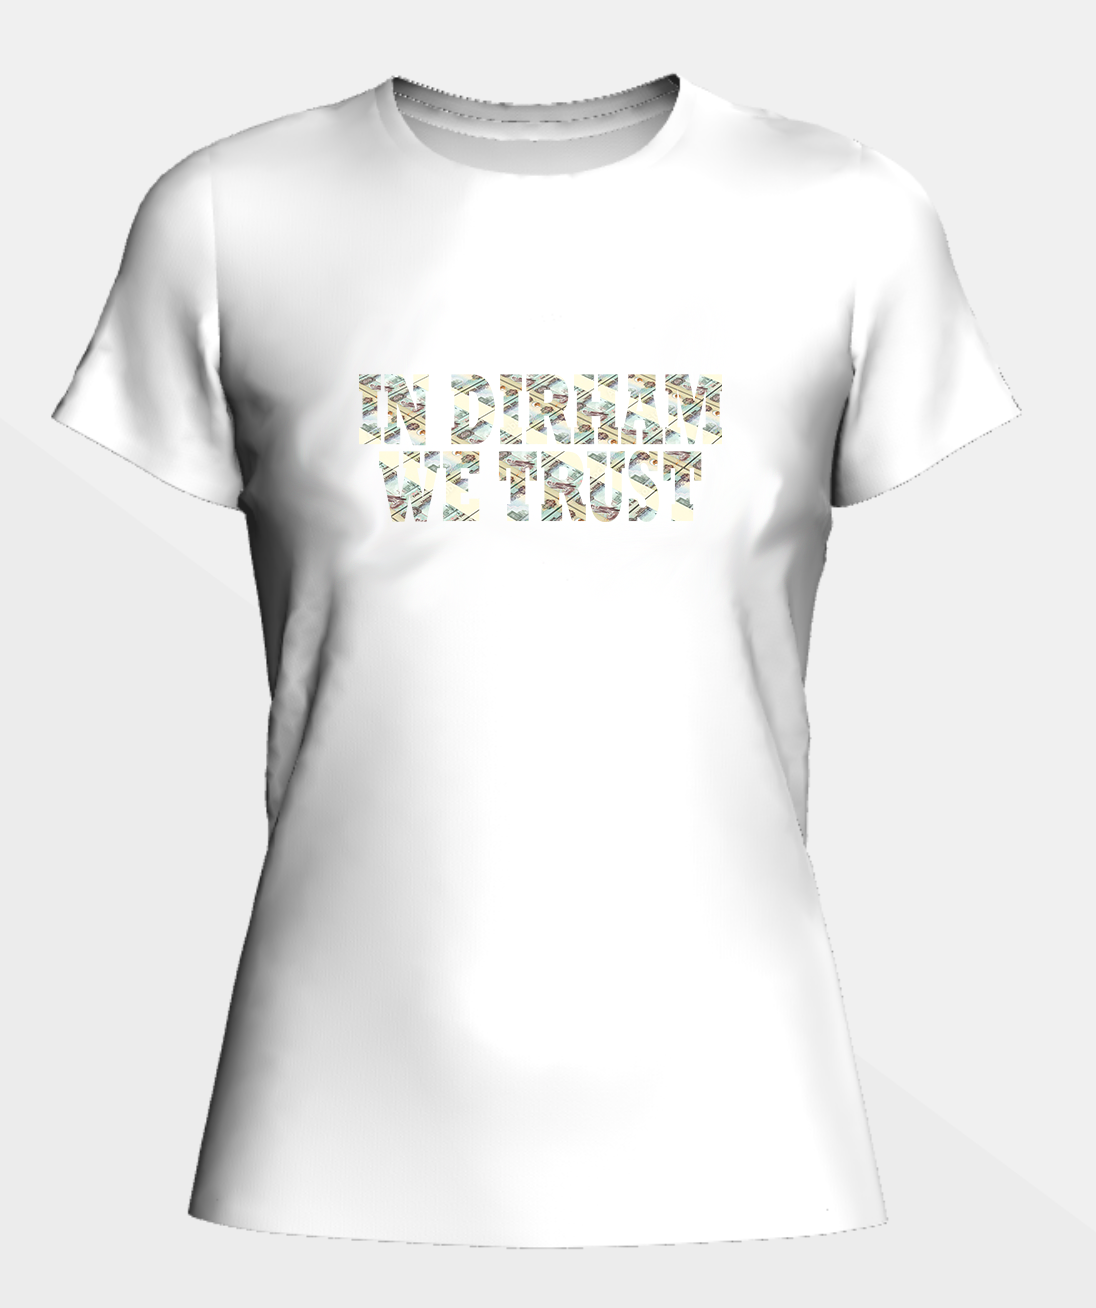 "IN DIRHAM WE TRUST" - Shirt Woman